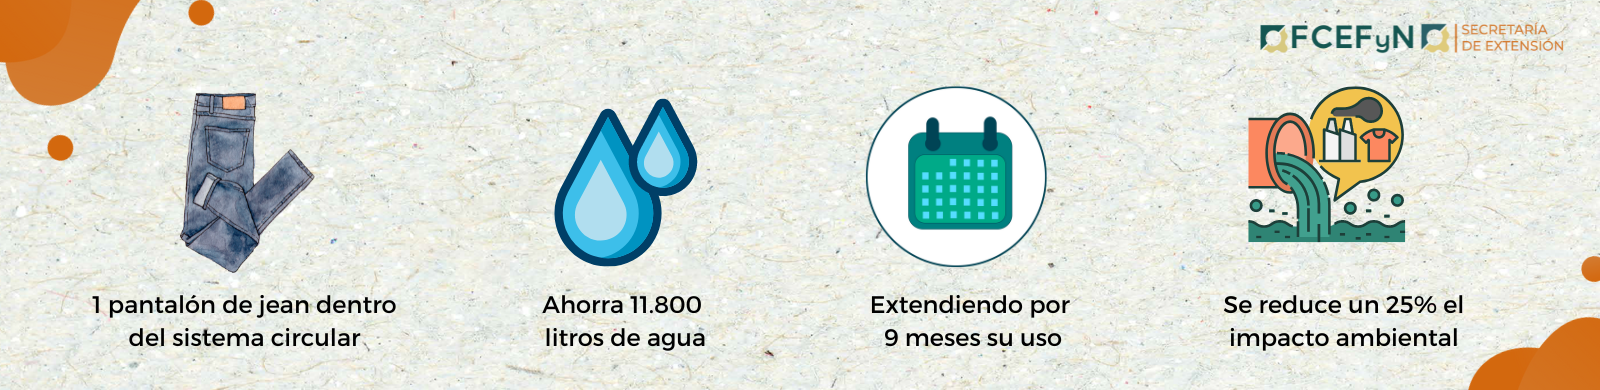 equivalencias agua e impacto.png